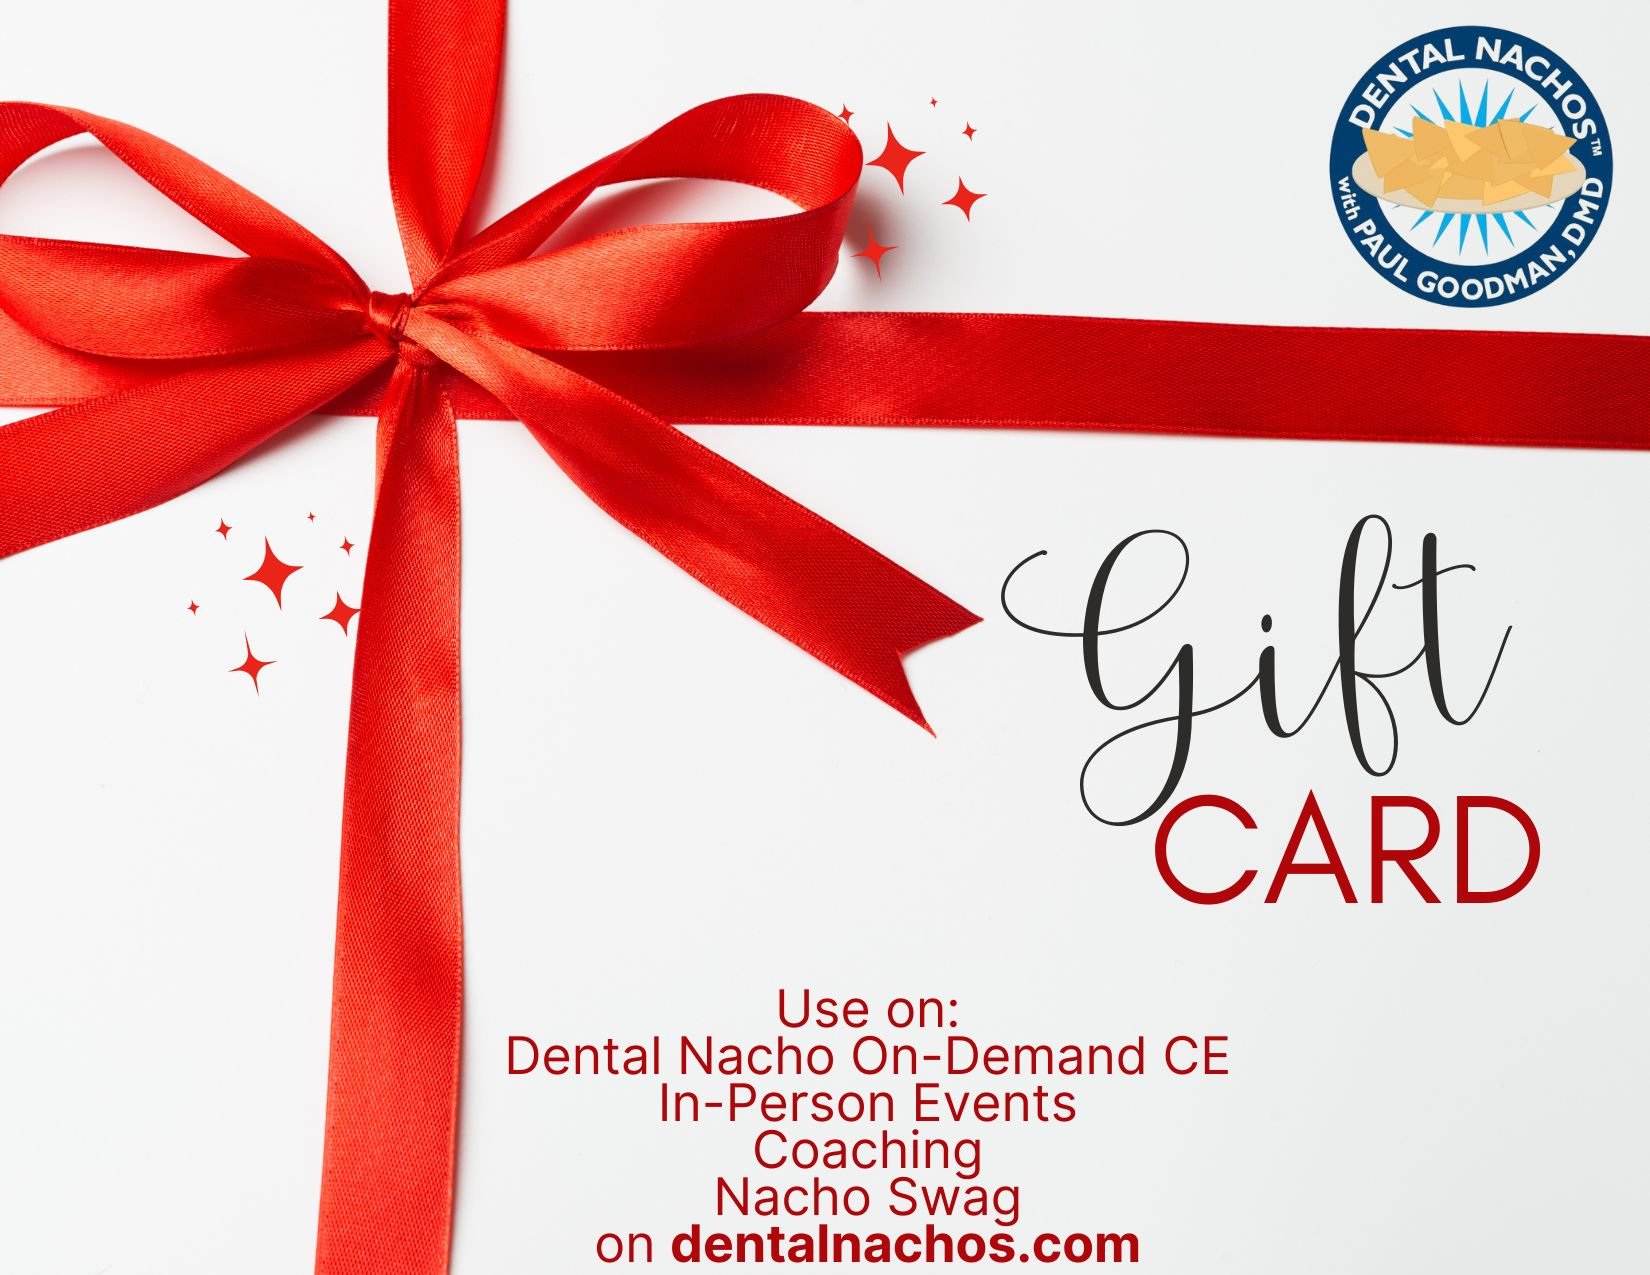 .com Gift Card - Greetabl